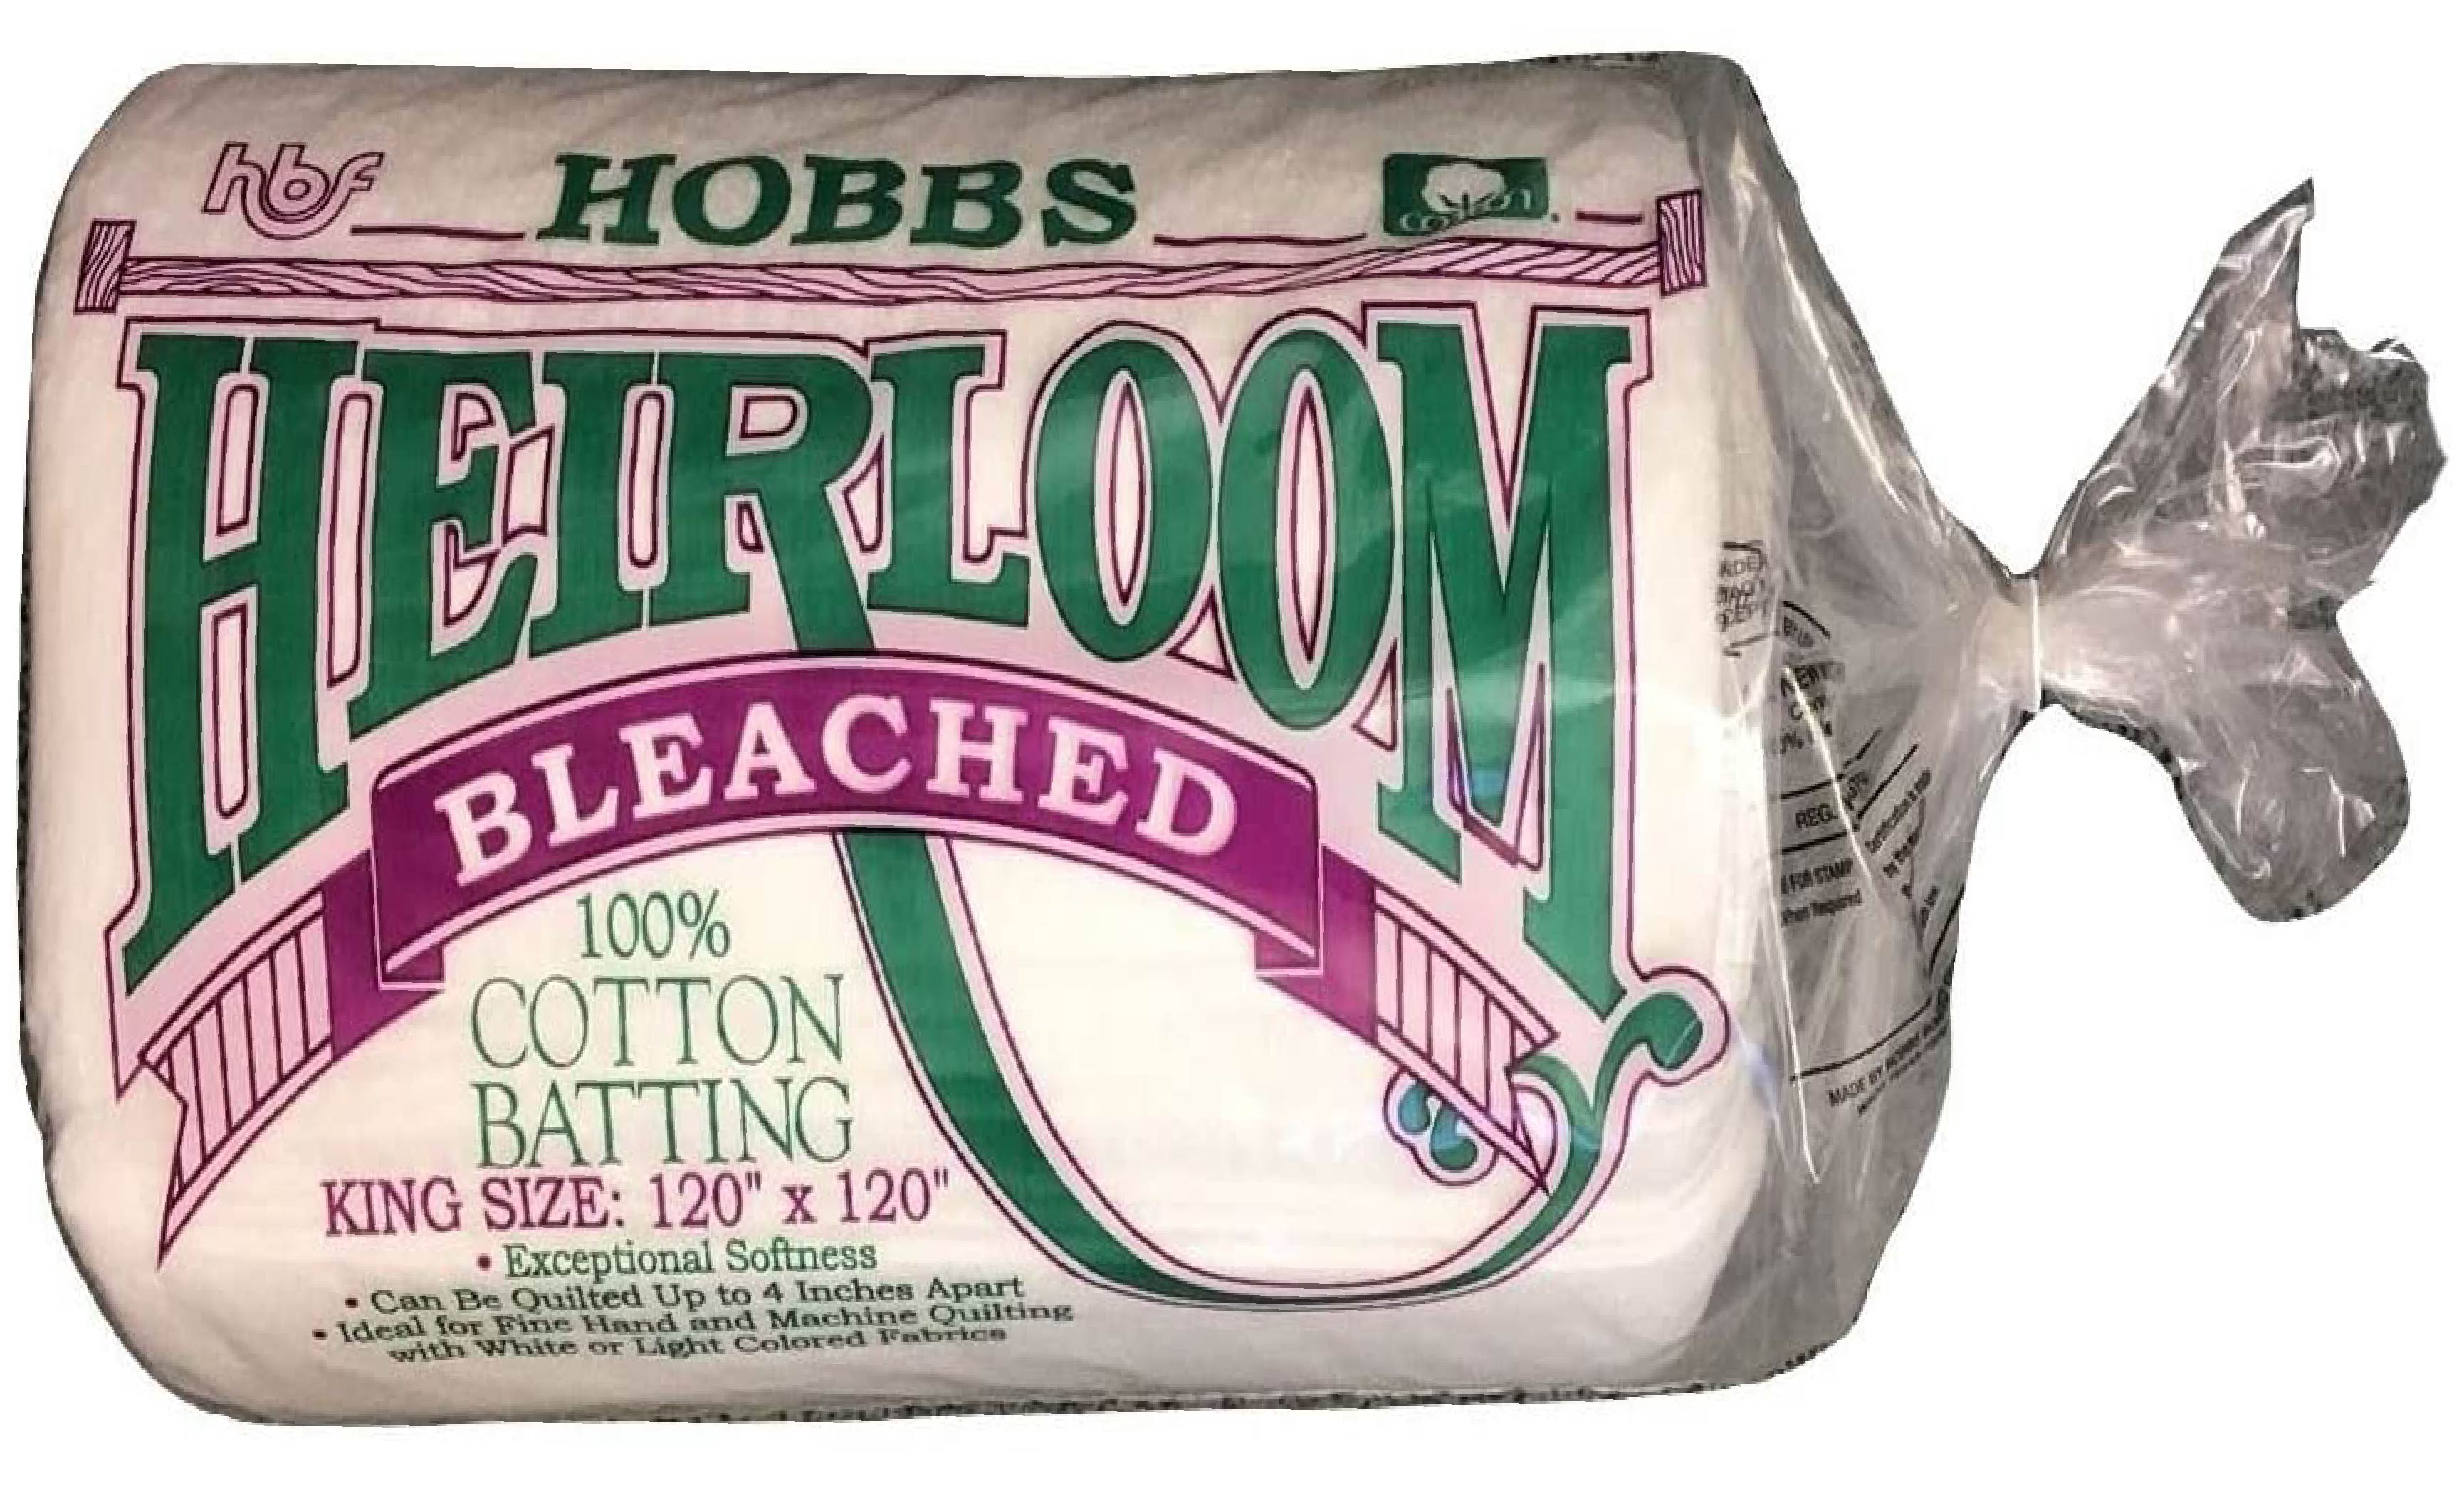 Hobbs Heirloom Bleached 100% Cotton Batting,  Various Sizes